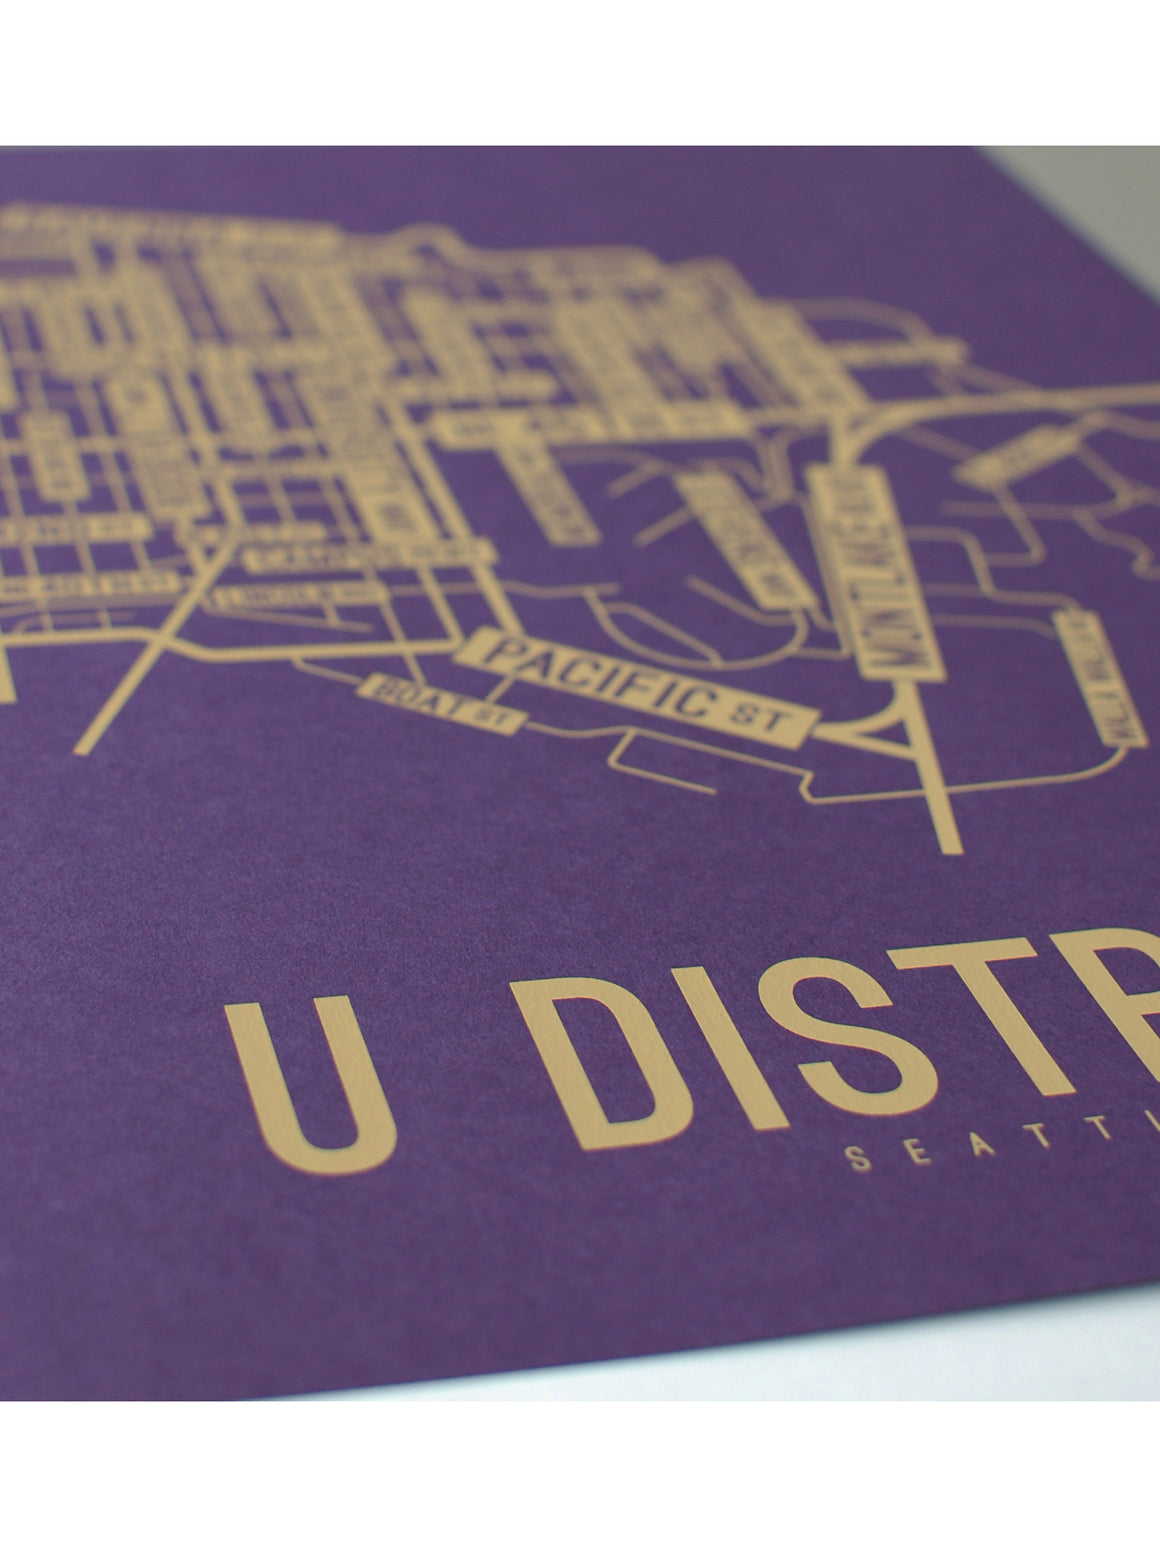 U District, Seattle, Washington Street Map Print